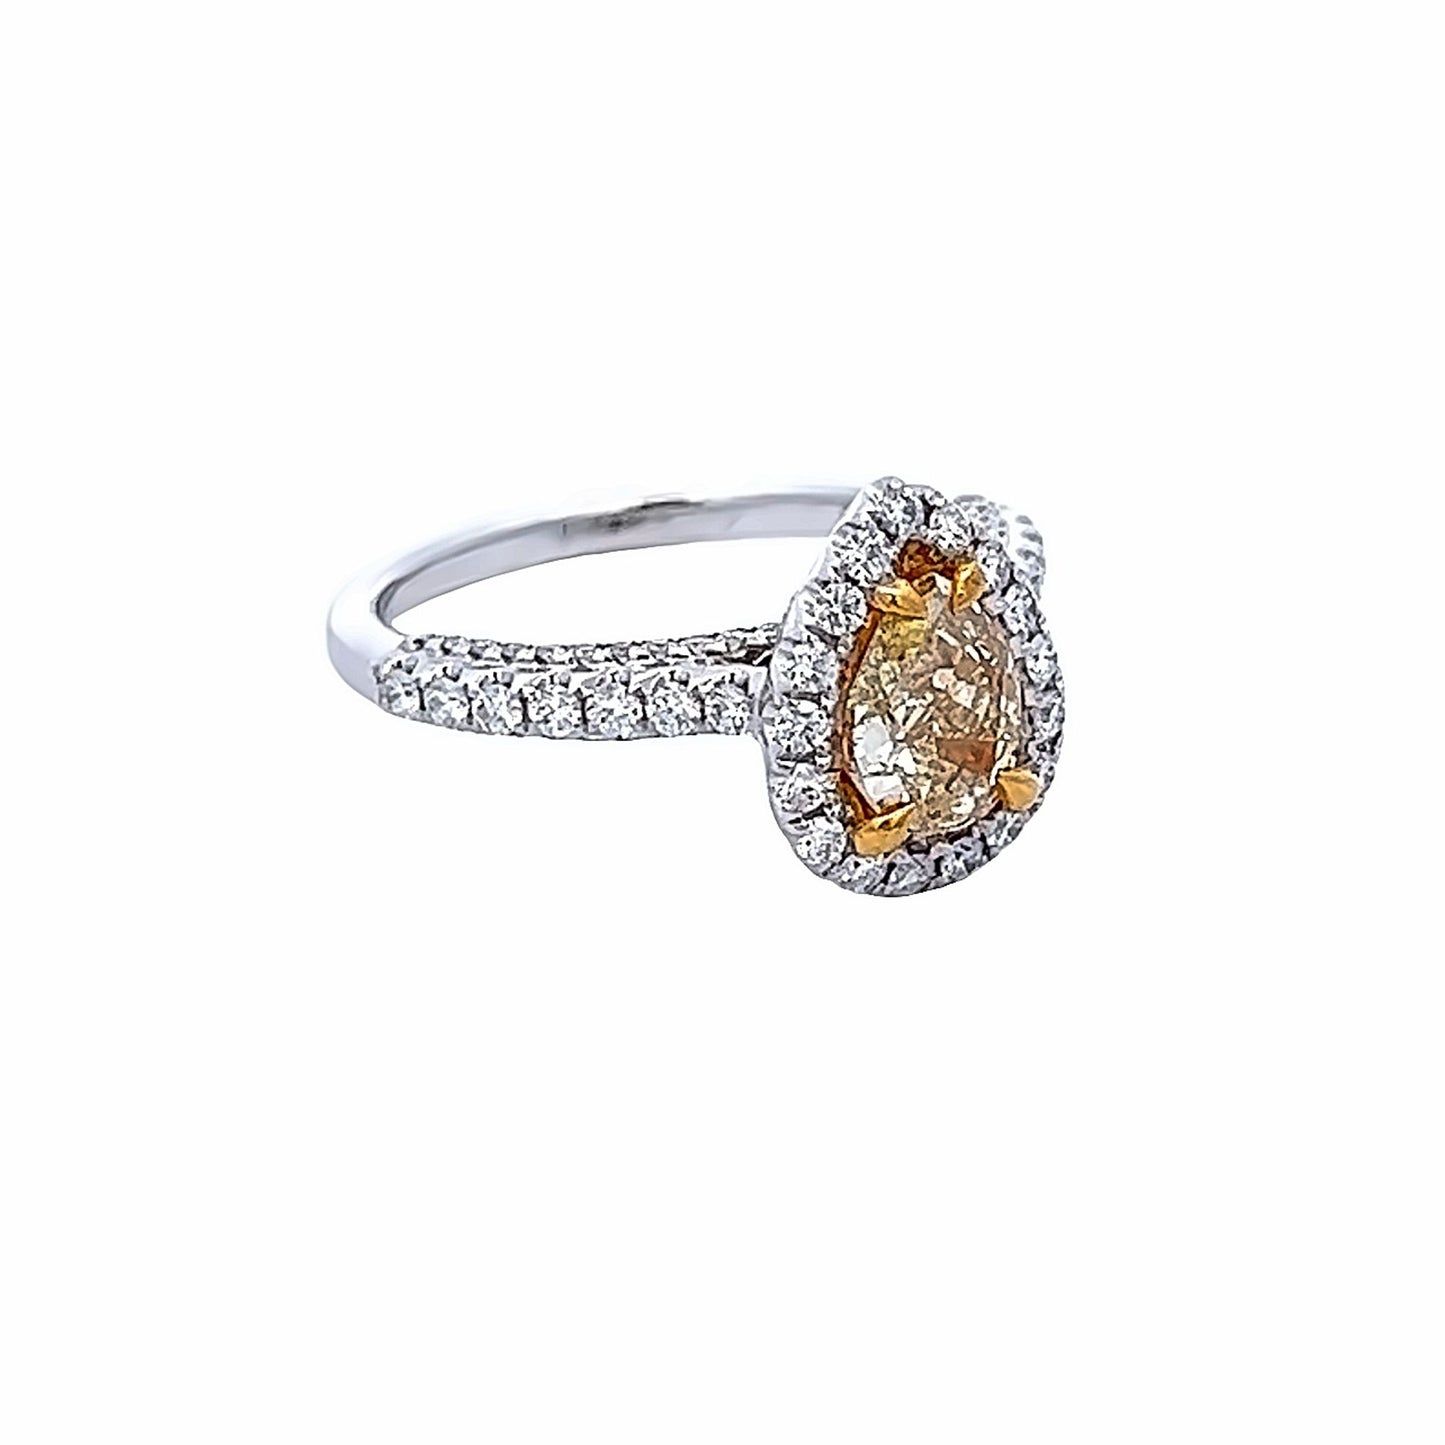 1.55 Tcw Pear Shape Fancy Intense Yellow Natural Diamond Halo Ring